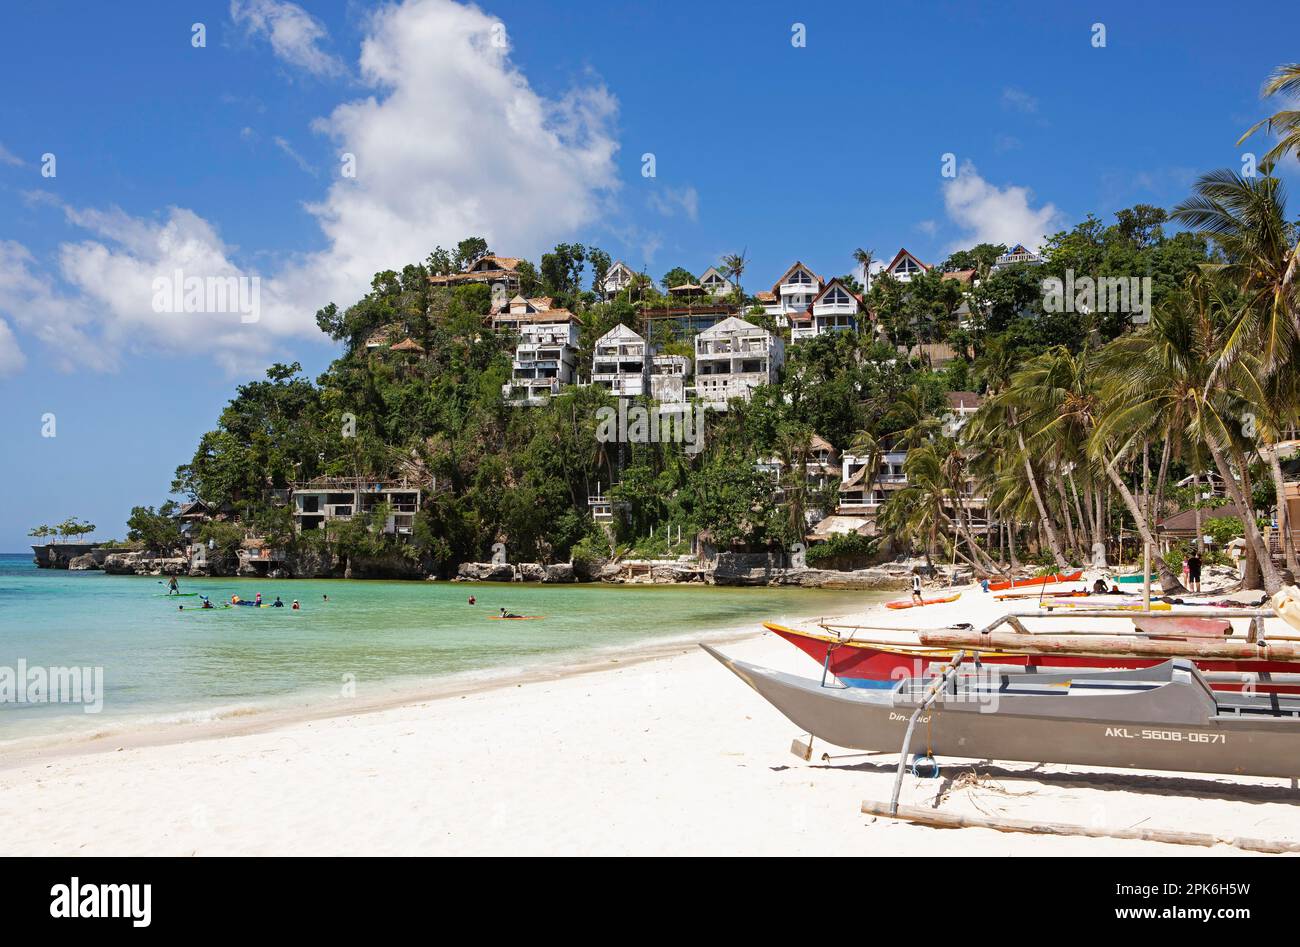 Diniwid Beach, Barangay Yapak, Boracay Island, Visayas Island Group, Philippines Banque D'Images